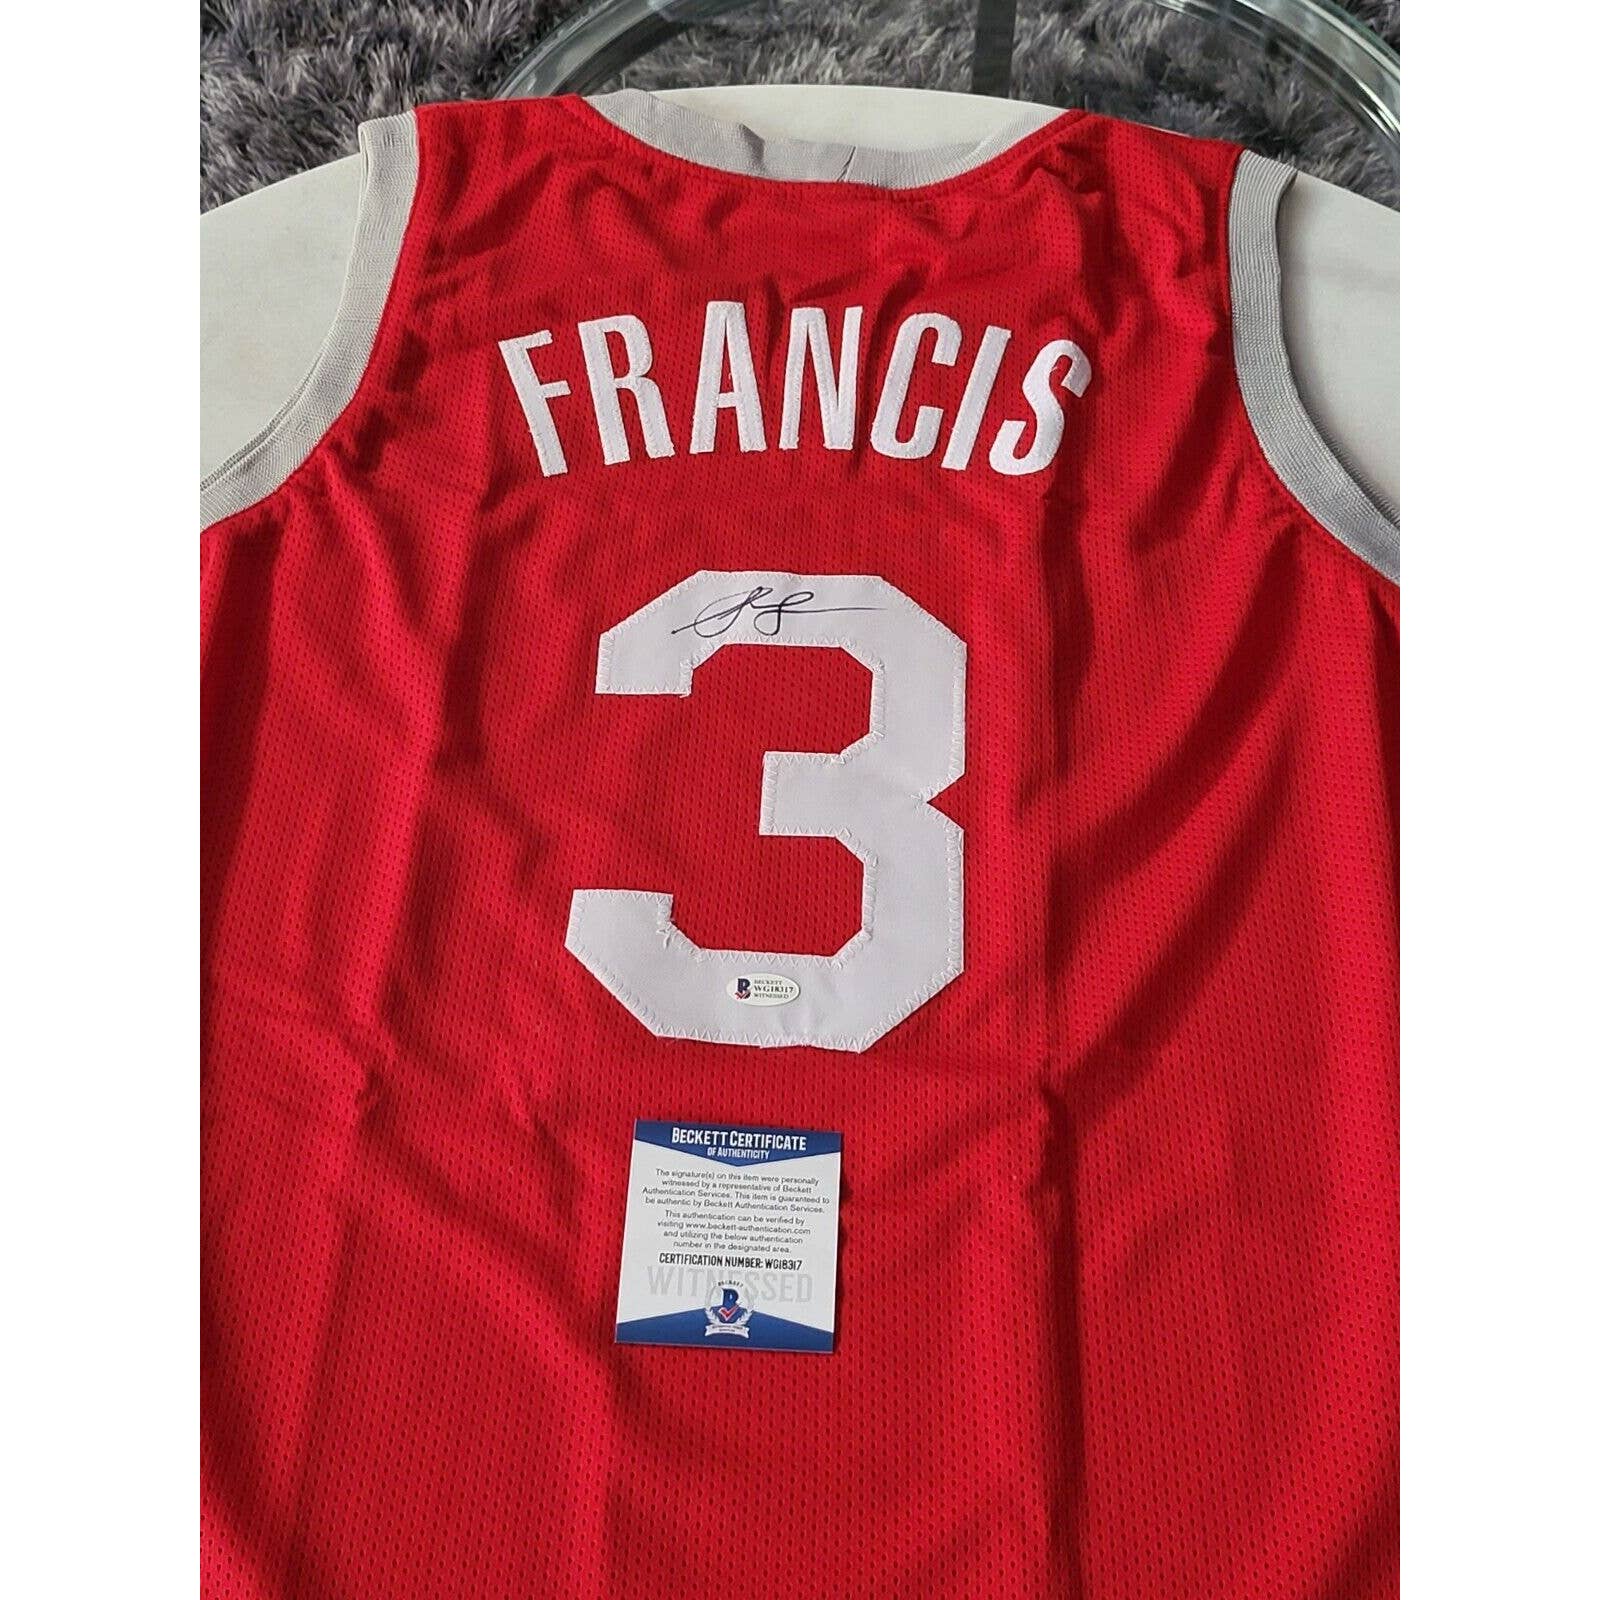 Steve Francis Autographed/Signed Jersey Beckett COA Houston Rockets - TreasuresEvolved